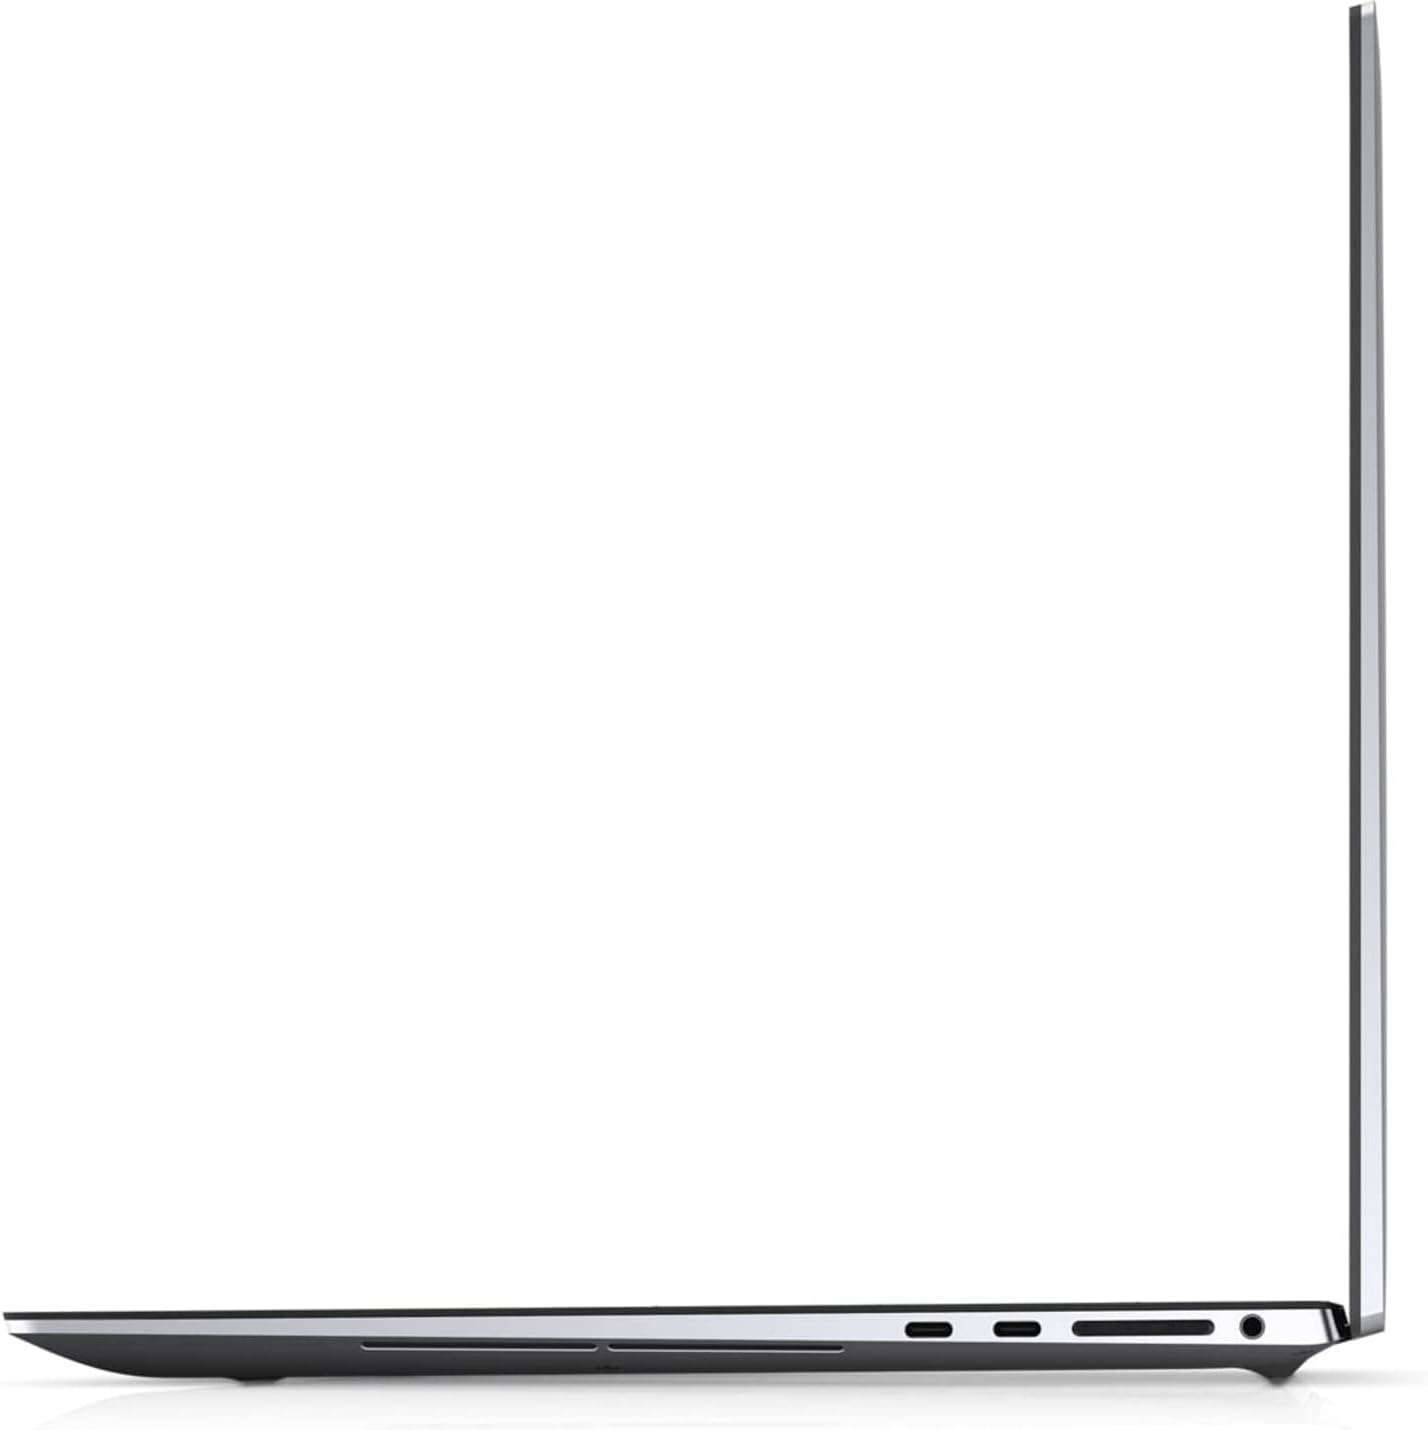 Dell Precision 5000 5760 Workstation Laptop (2021) Review